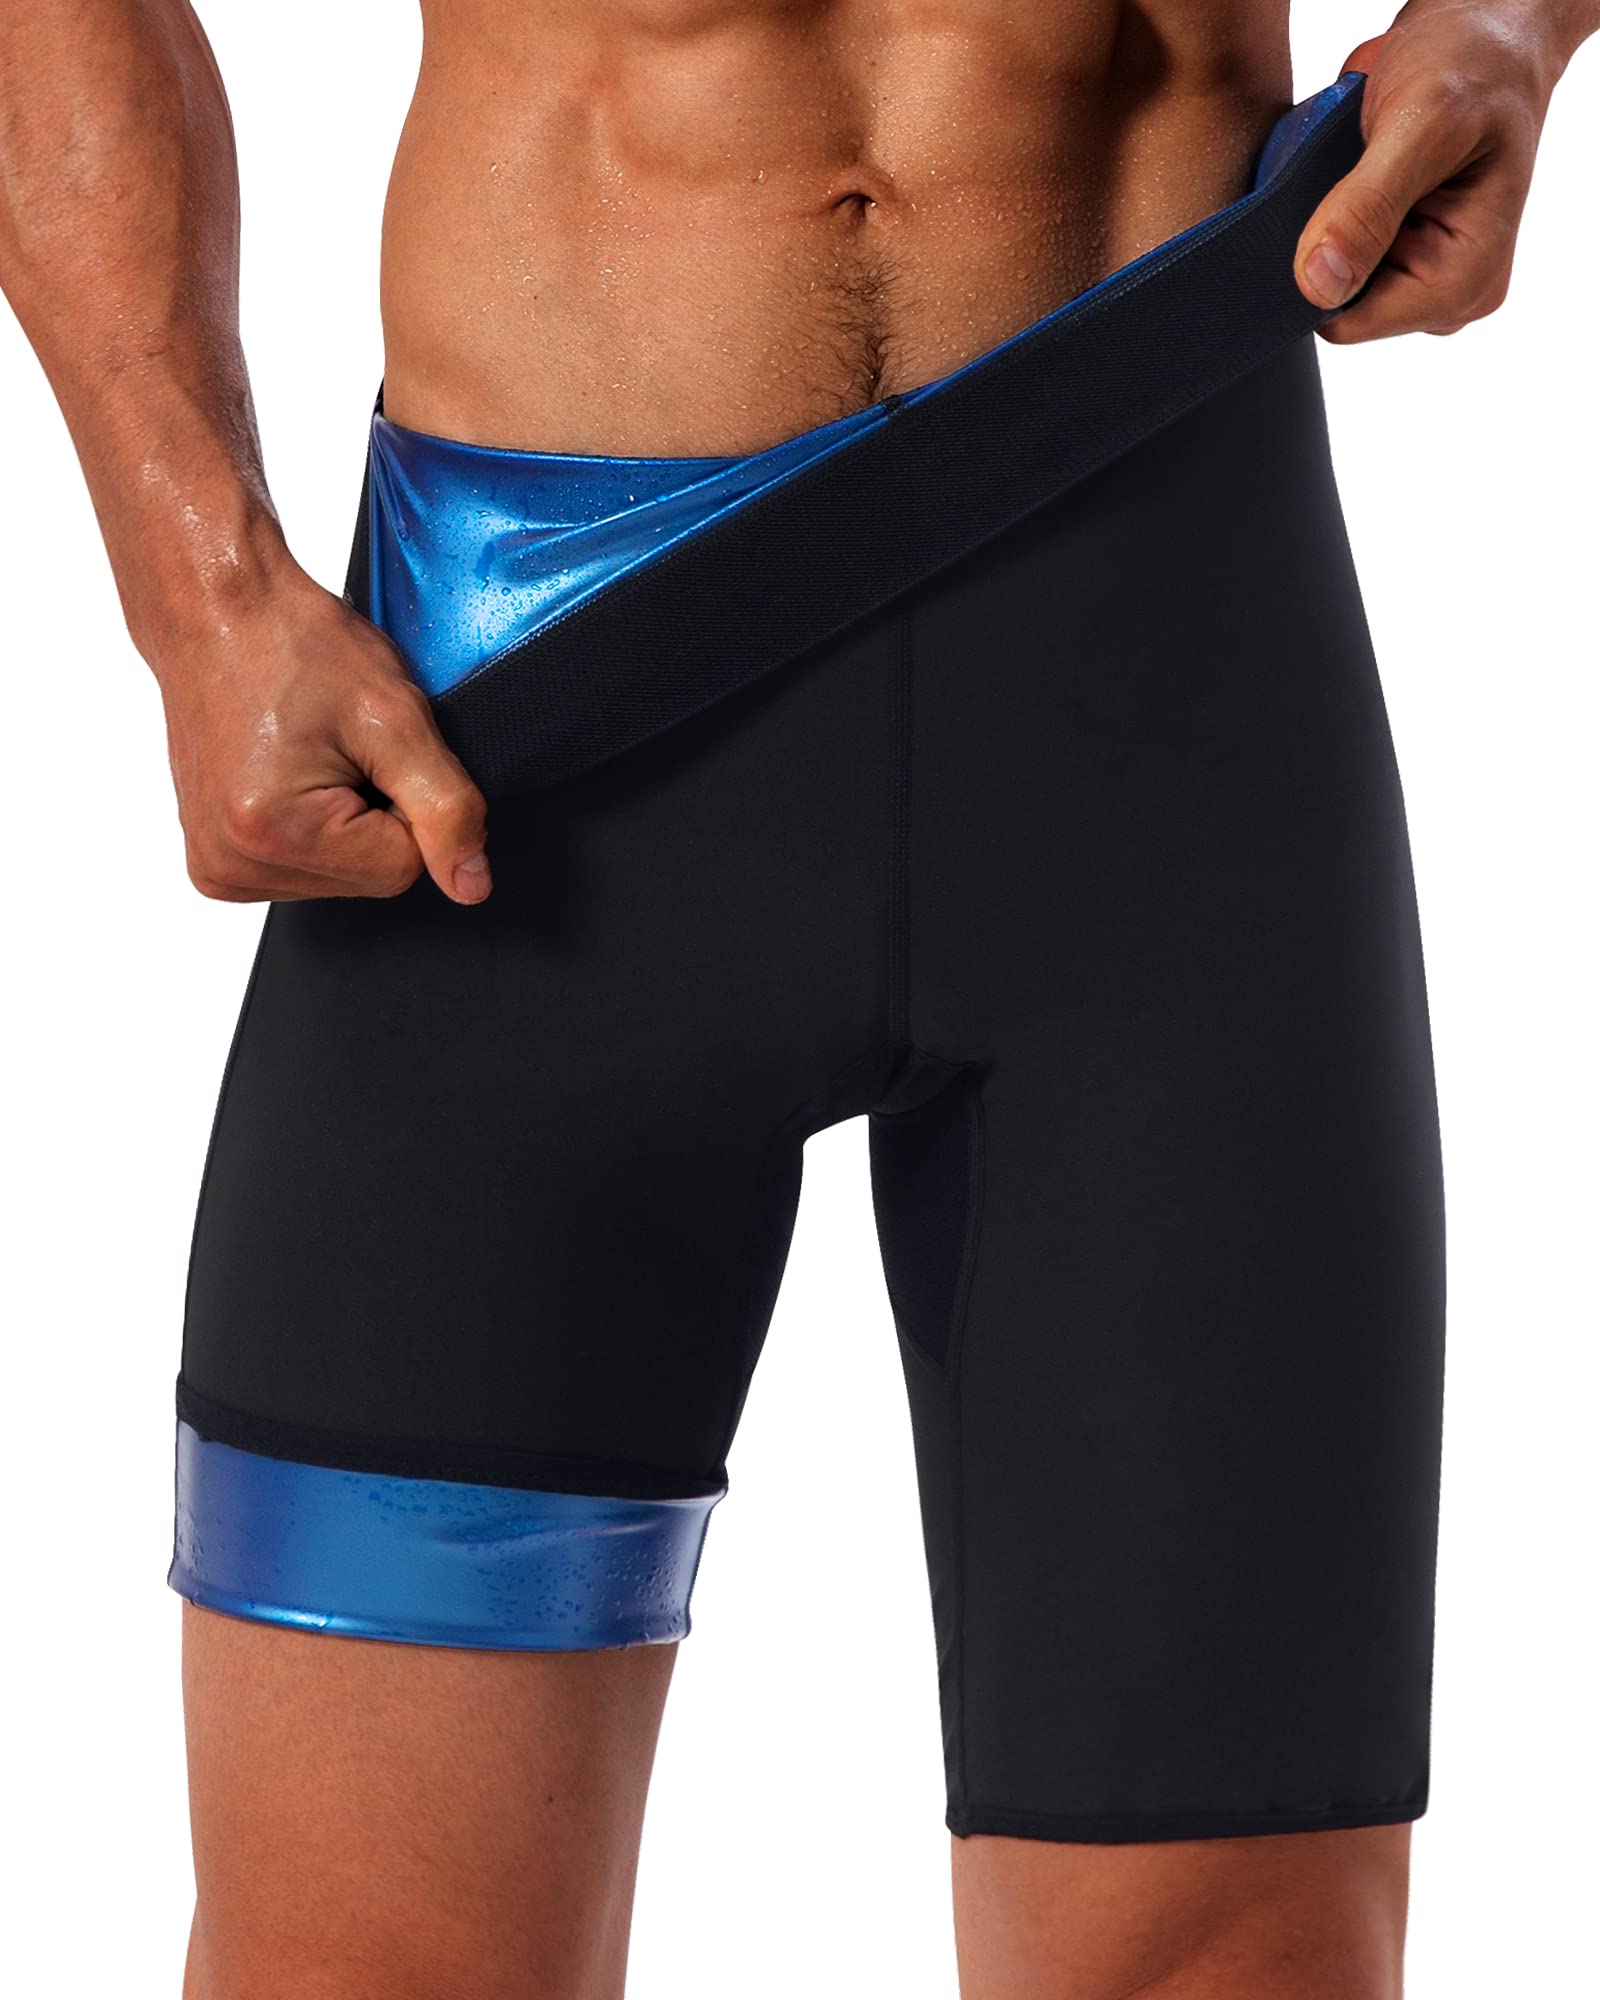 LMCOB Sauna Sweat Short Pants for Men Sauna Leggings Compression Hight  Waist Sauna Pants Sauna suits for men Workout Short Pants Blue Lining Large